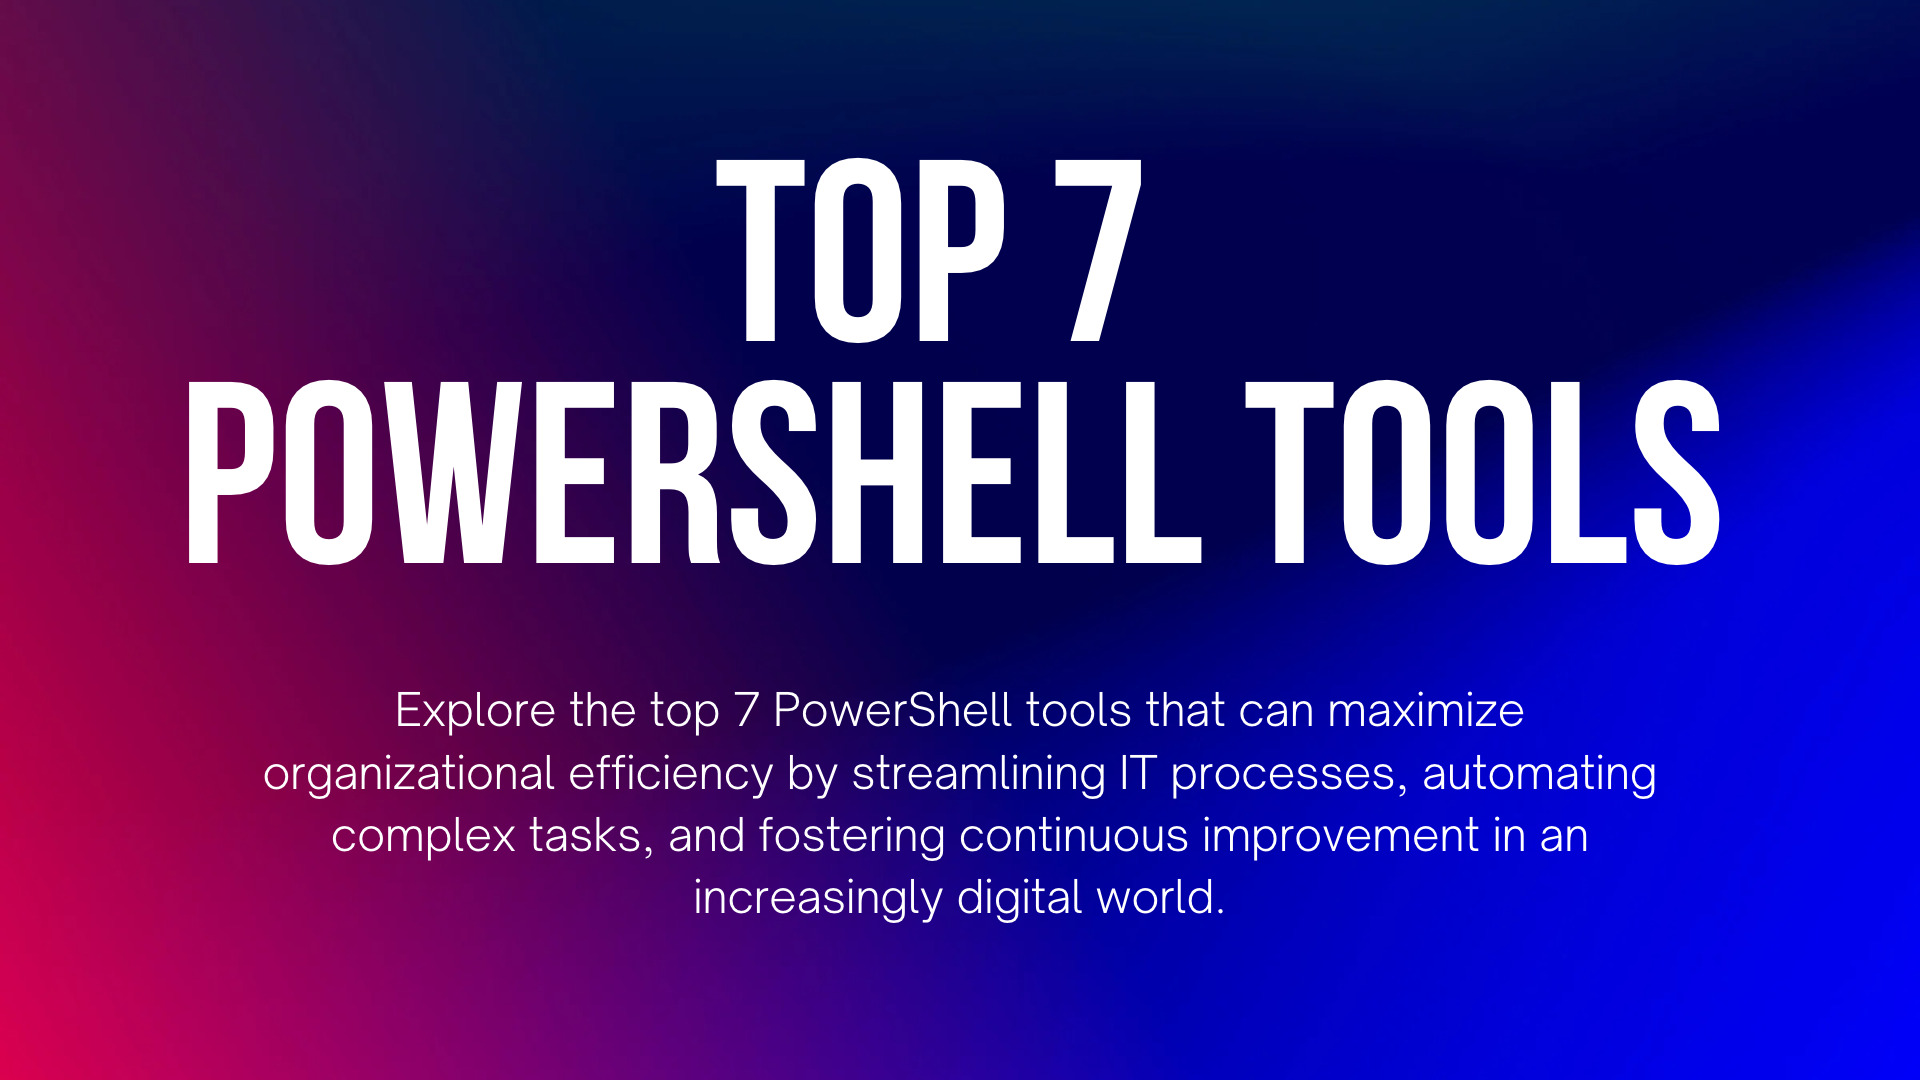 Top 7 Powershell Tools